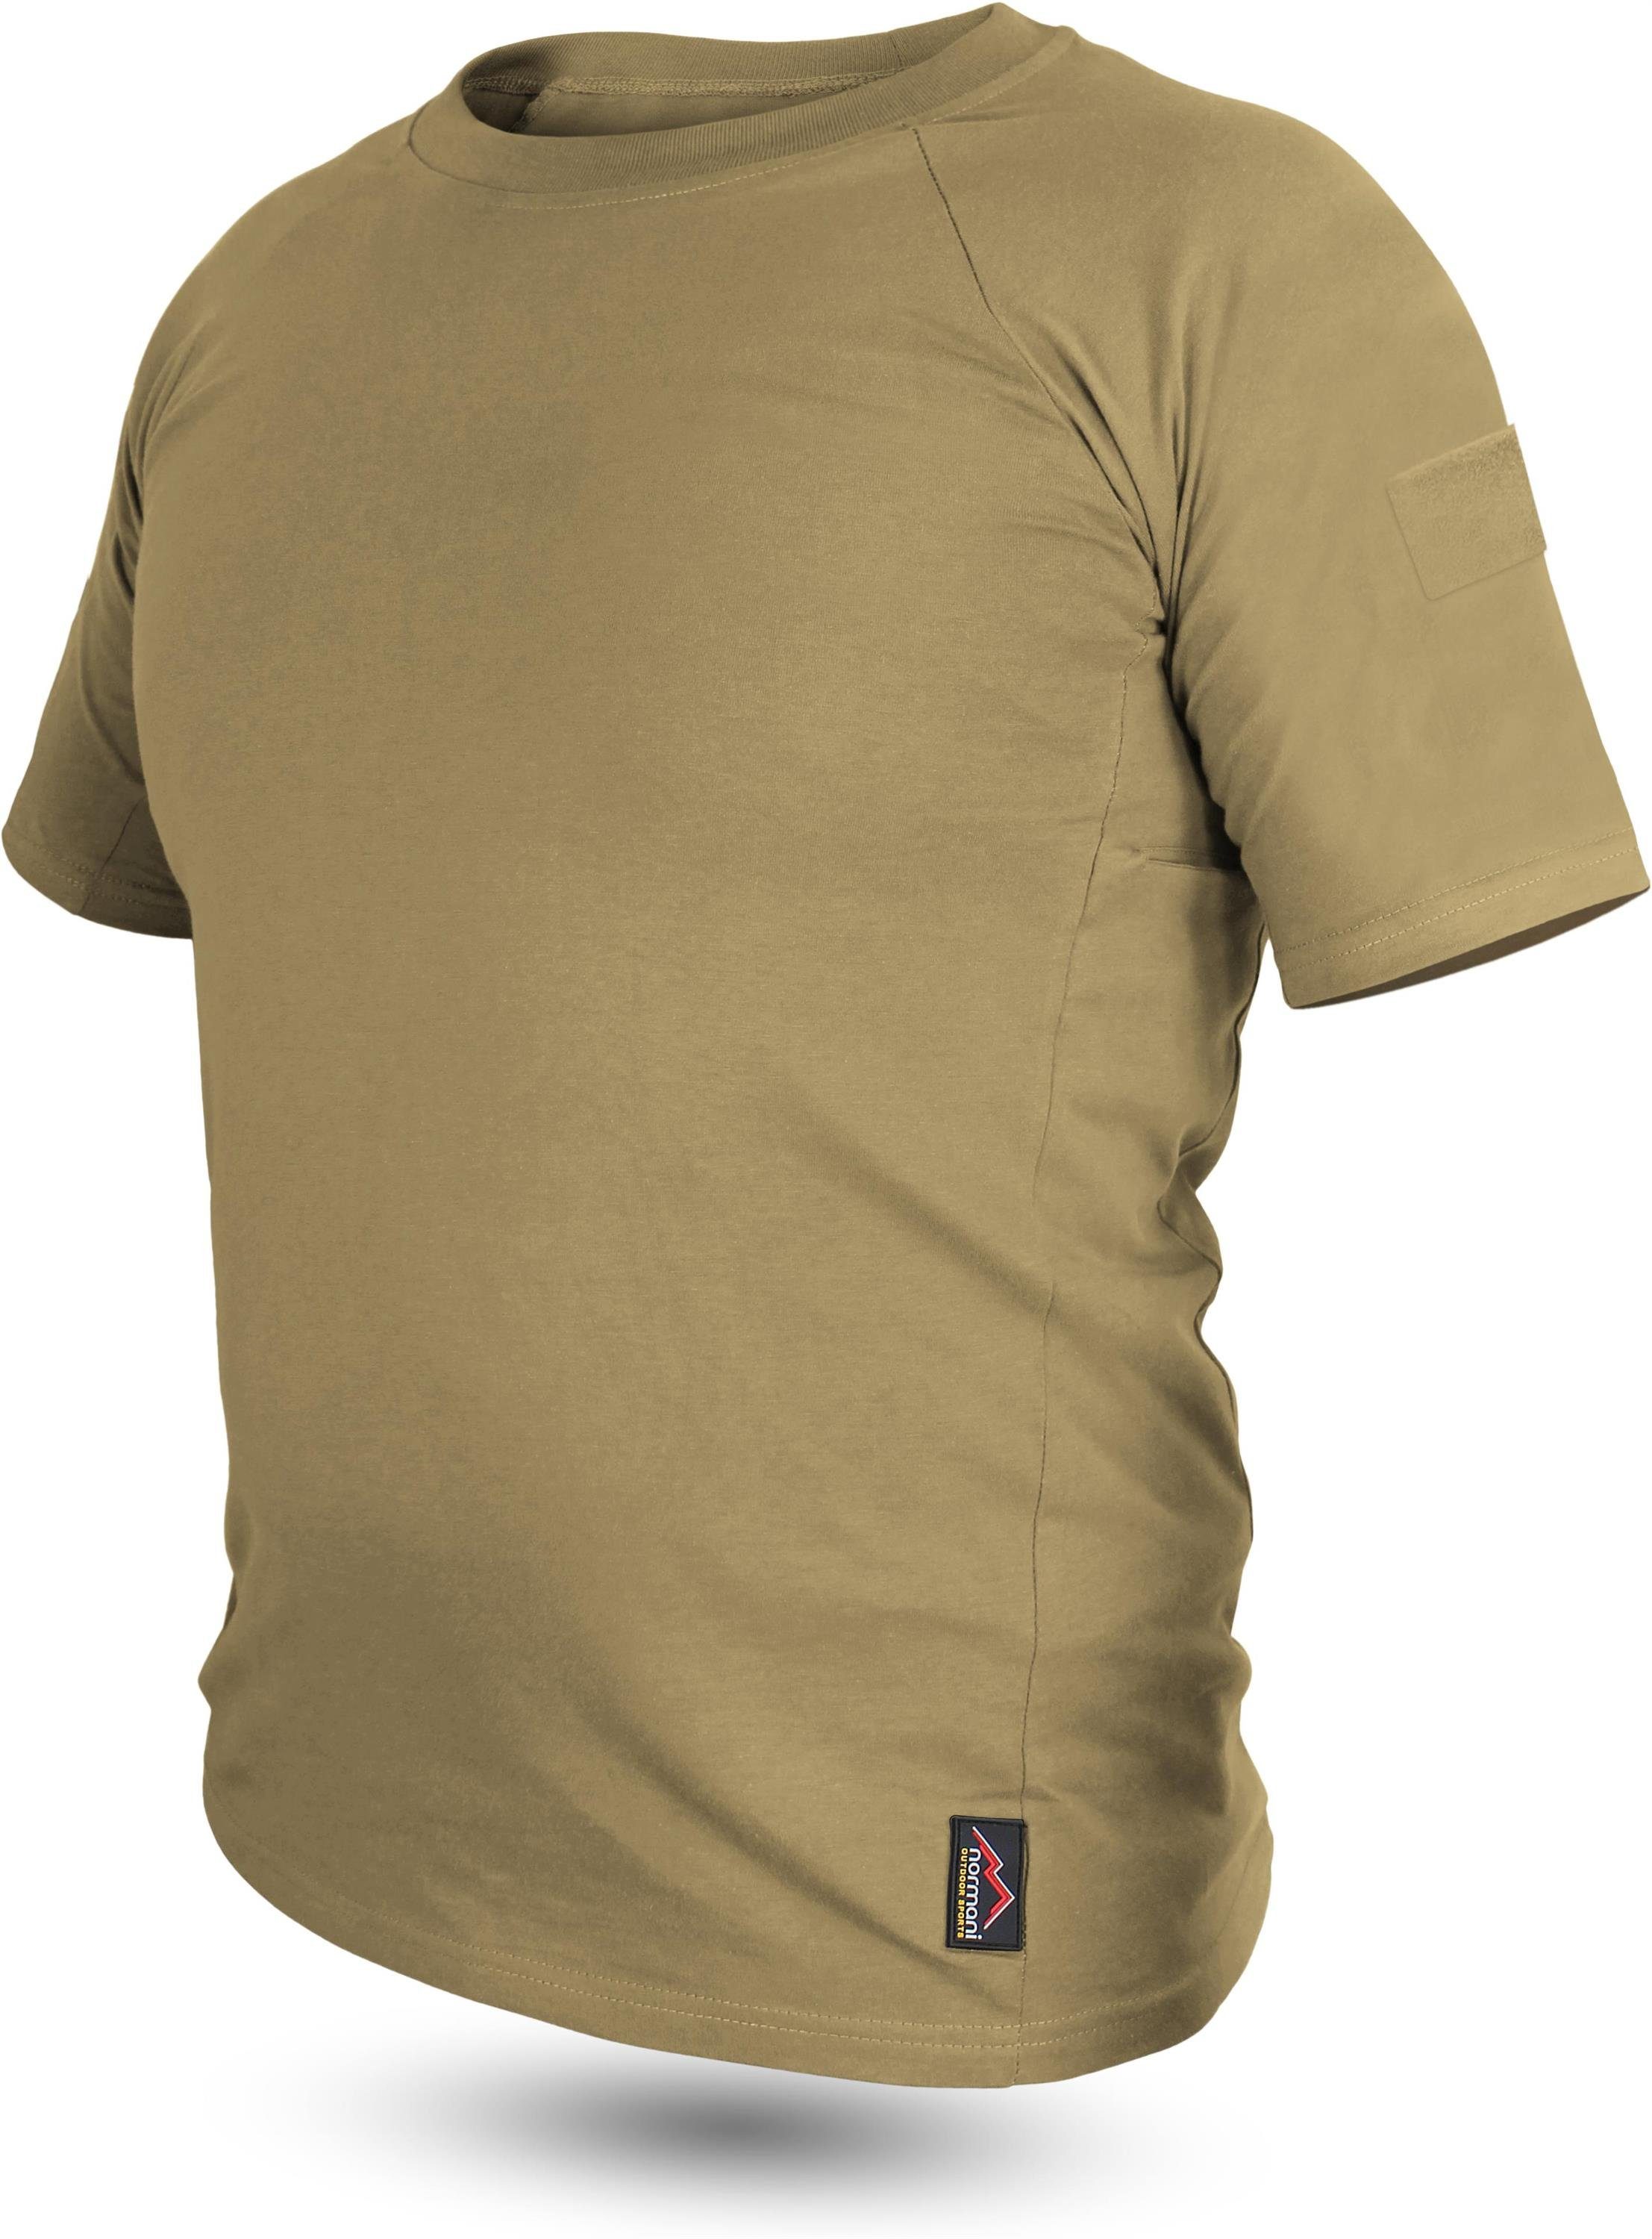 normani Funktionsshirt Herren Taktisches den T-Shirt Shirt Paintball auf Kampfshirt mit Kurzarm Captain Khaki Klettflächen Armen T-Shirt Sommer